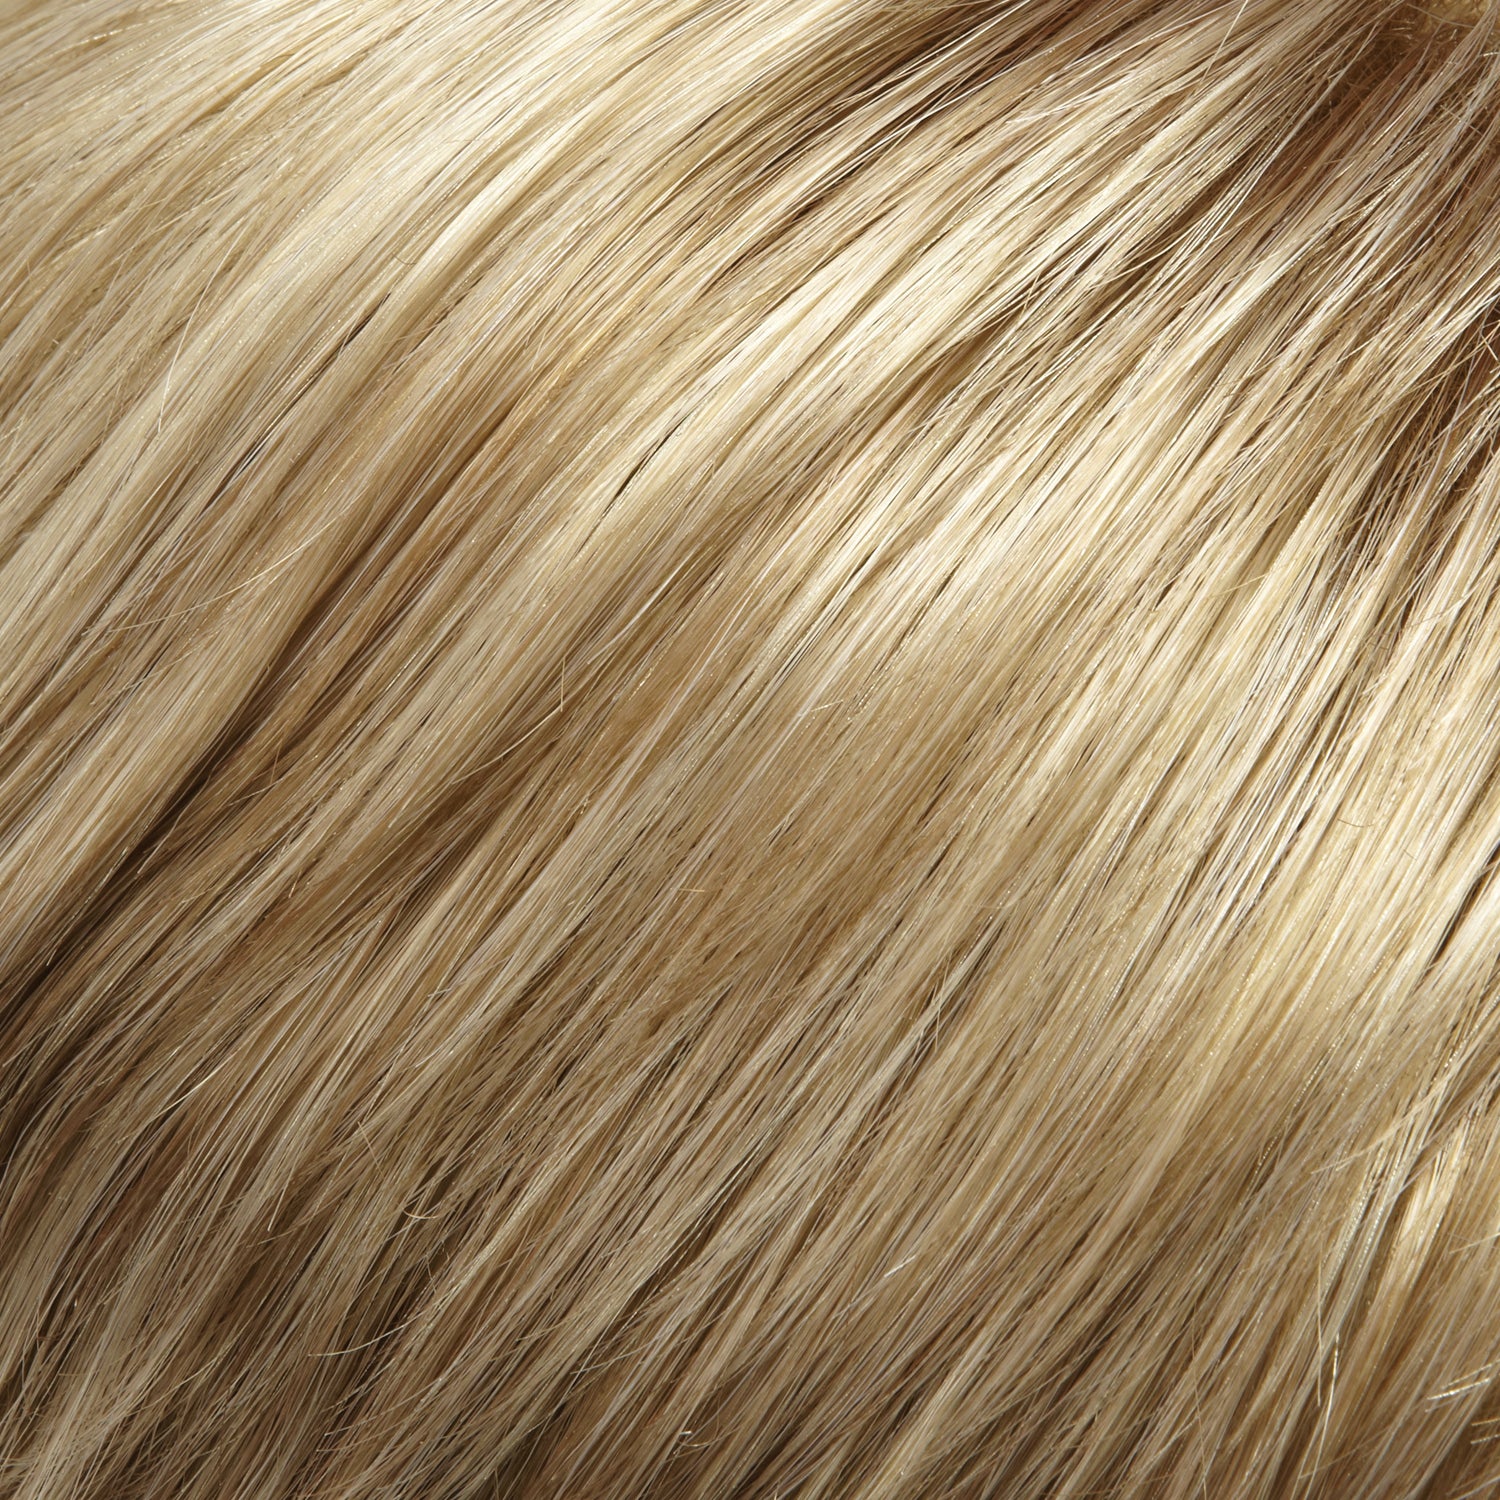 14/24 medium natural - ash blonde < natural blonde blend